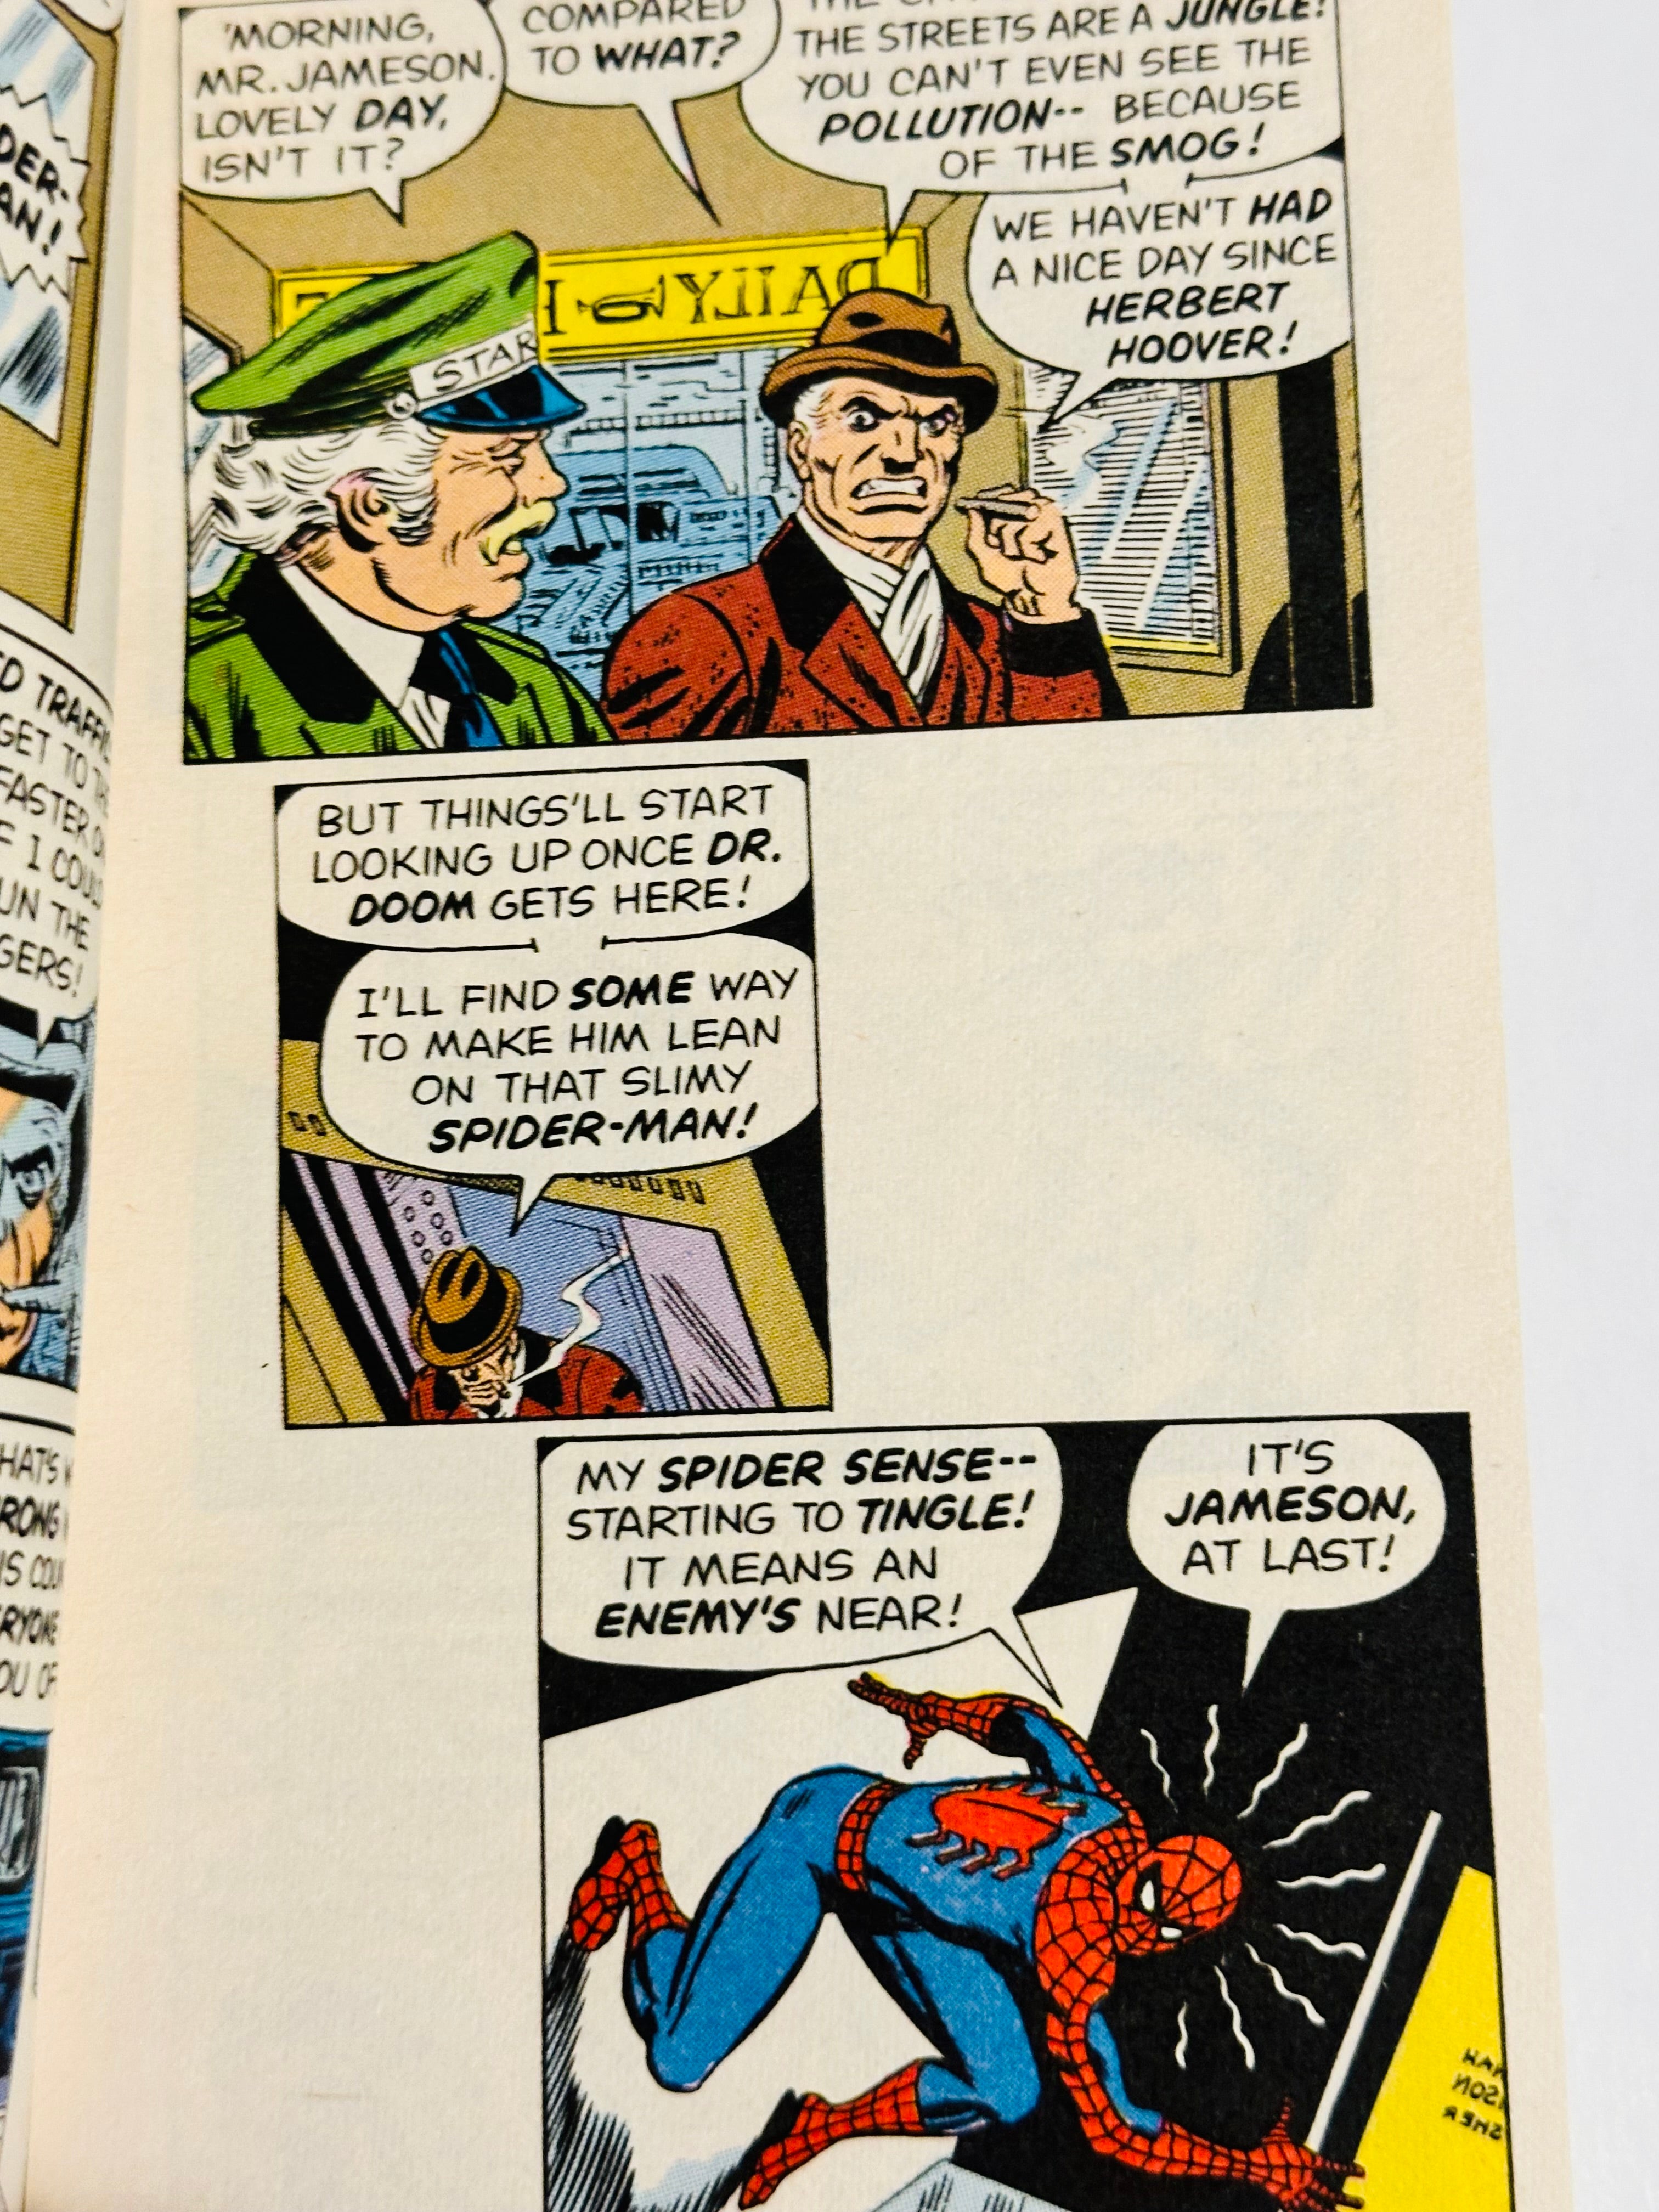 Amazing Spider-Man vintage comic pocket book 1980